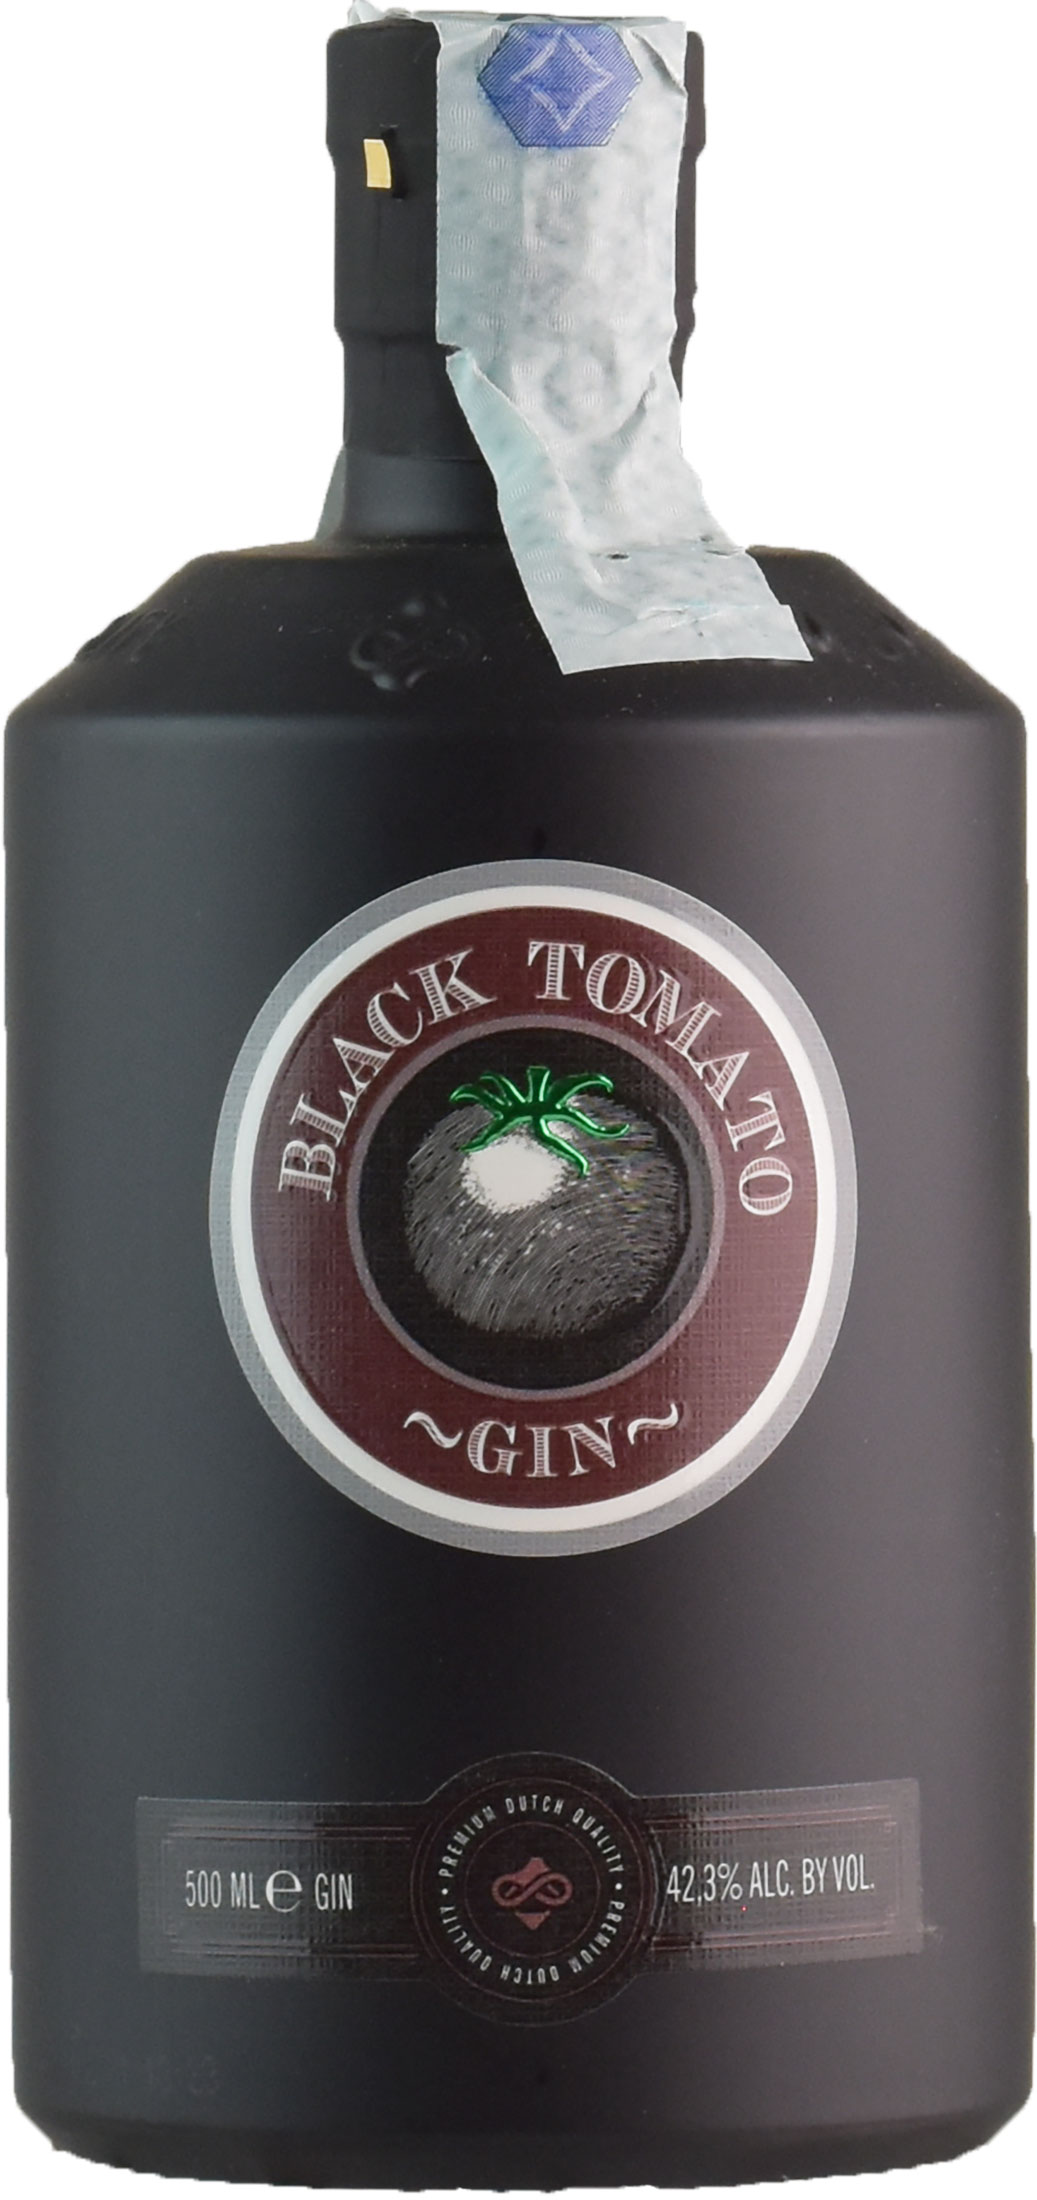 Dutch Windmill Spirits Black Tomato Gin 0.5L